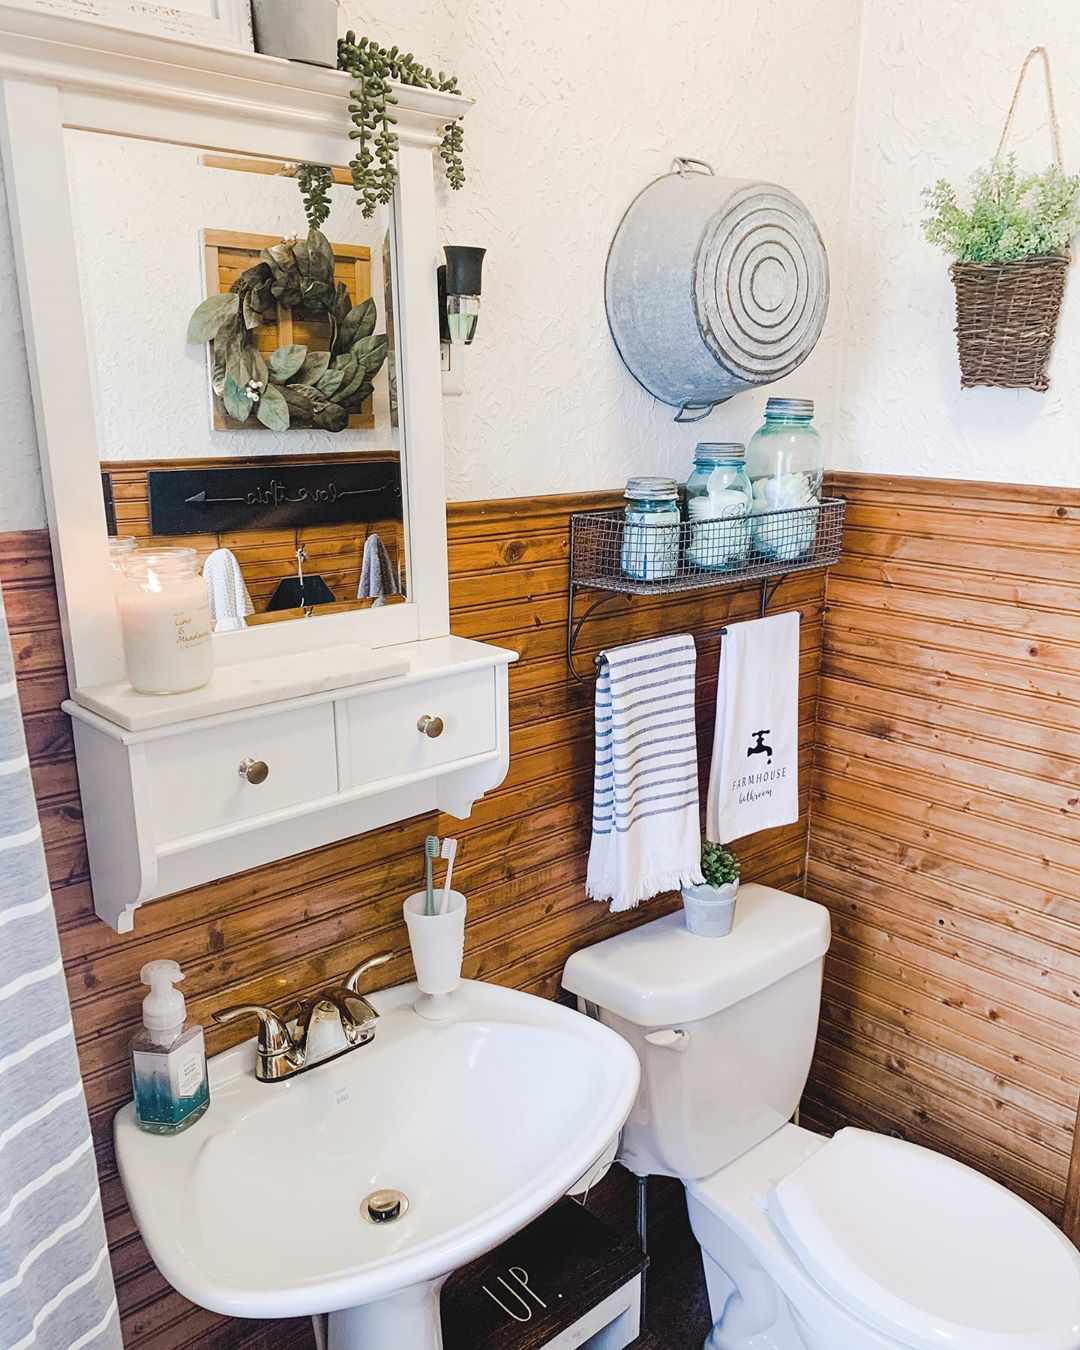 Salle de bain avec murs en bois